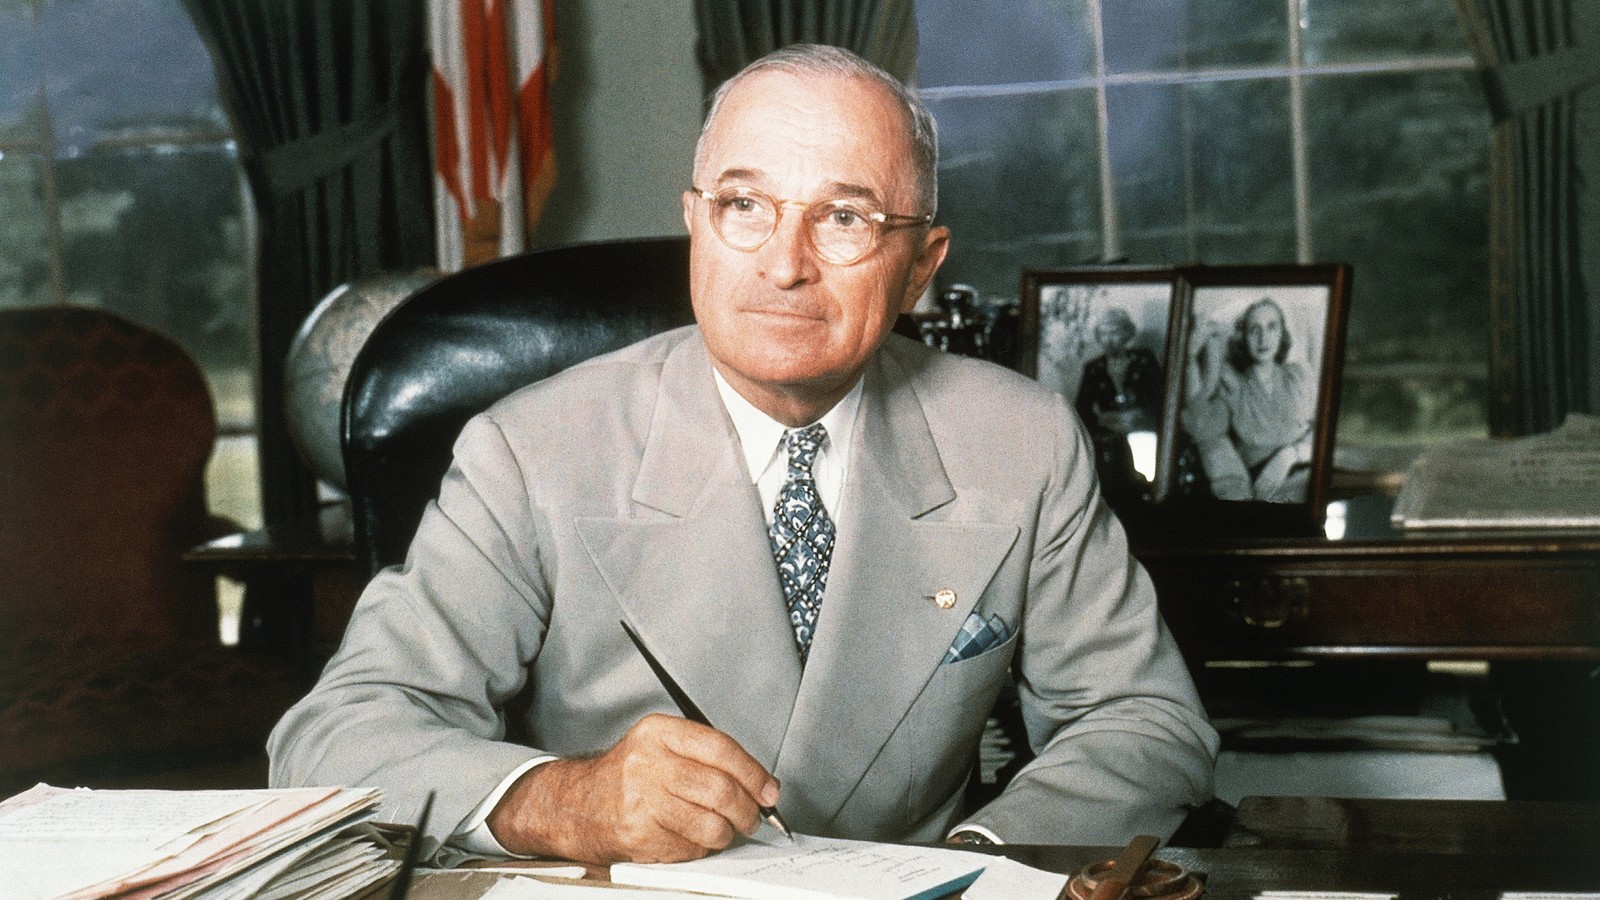 President Harry S. Truman on Using the Atomic Bomb - The Atlantic